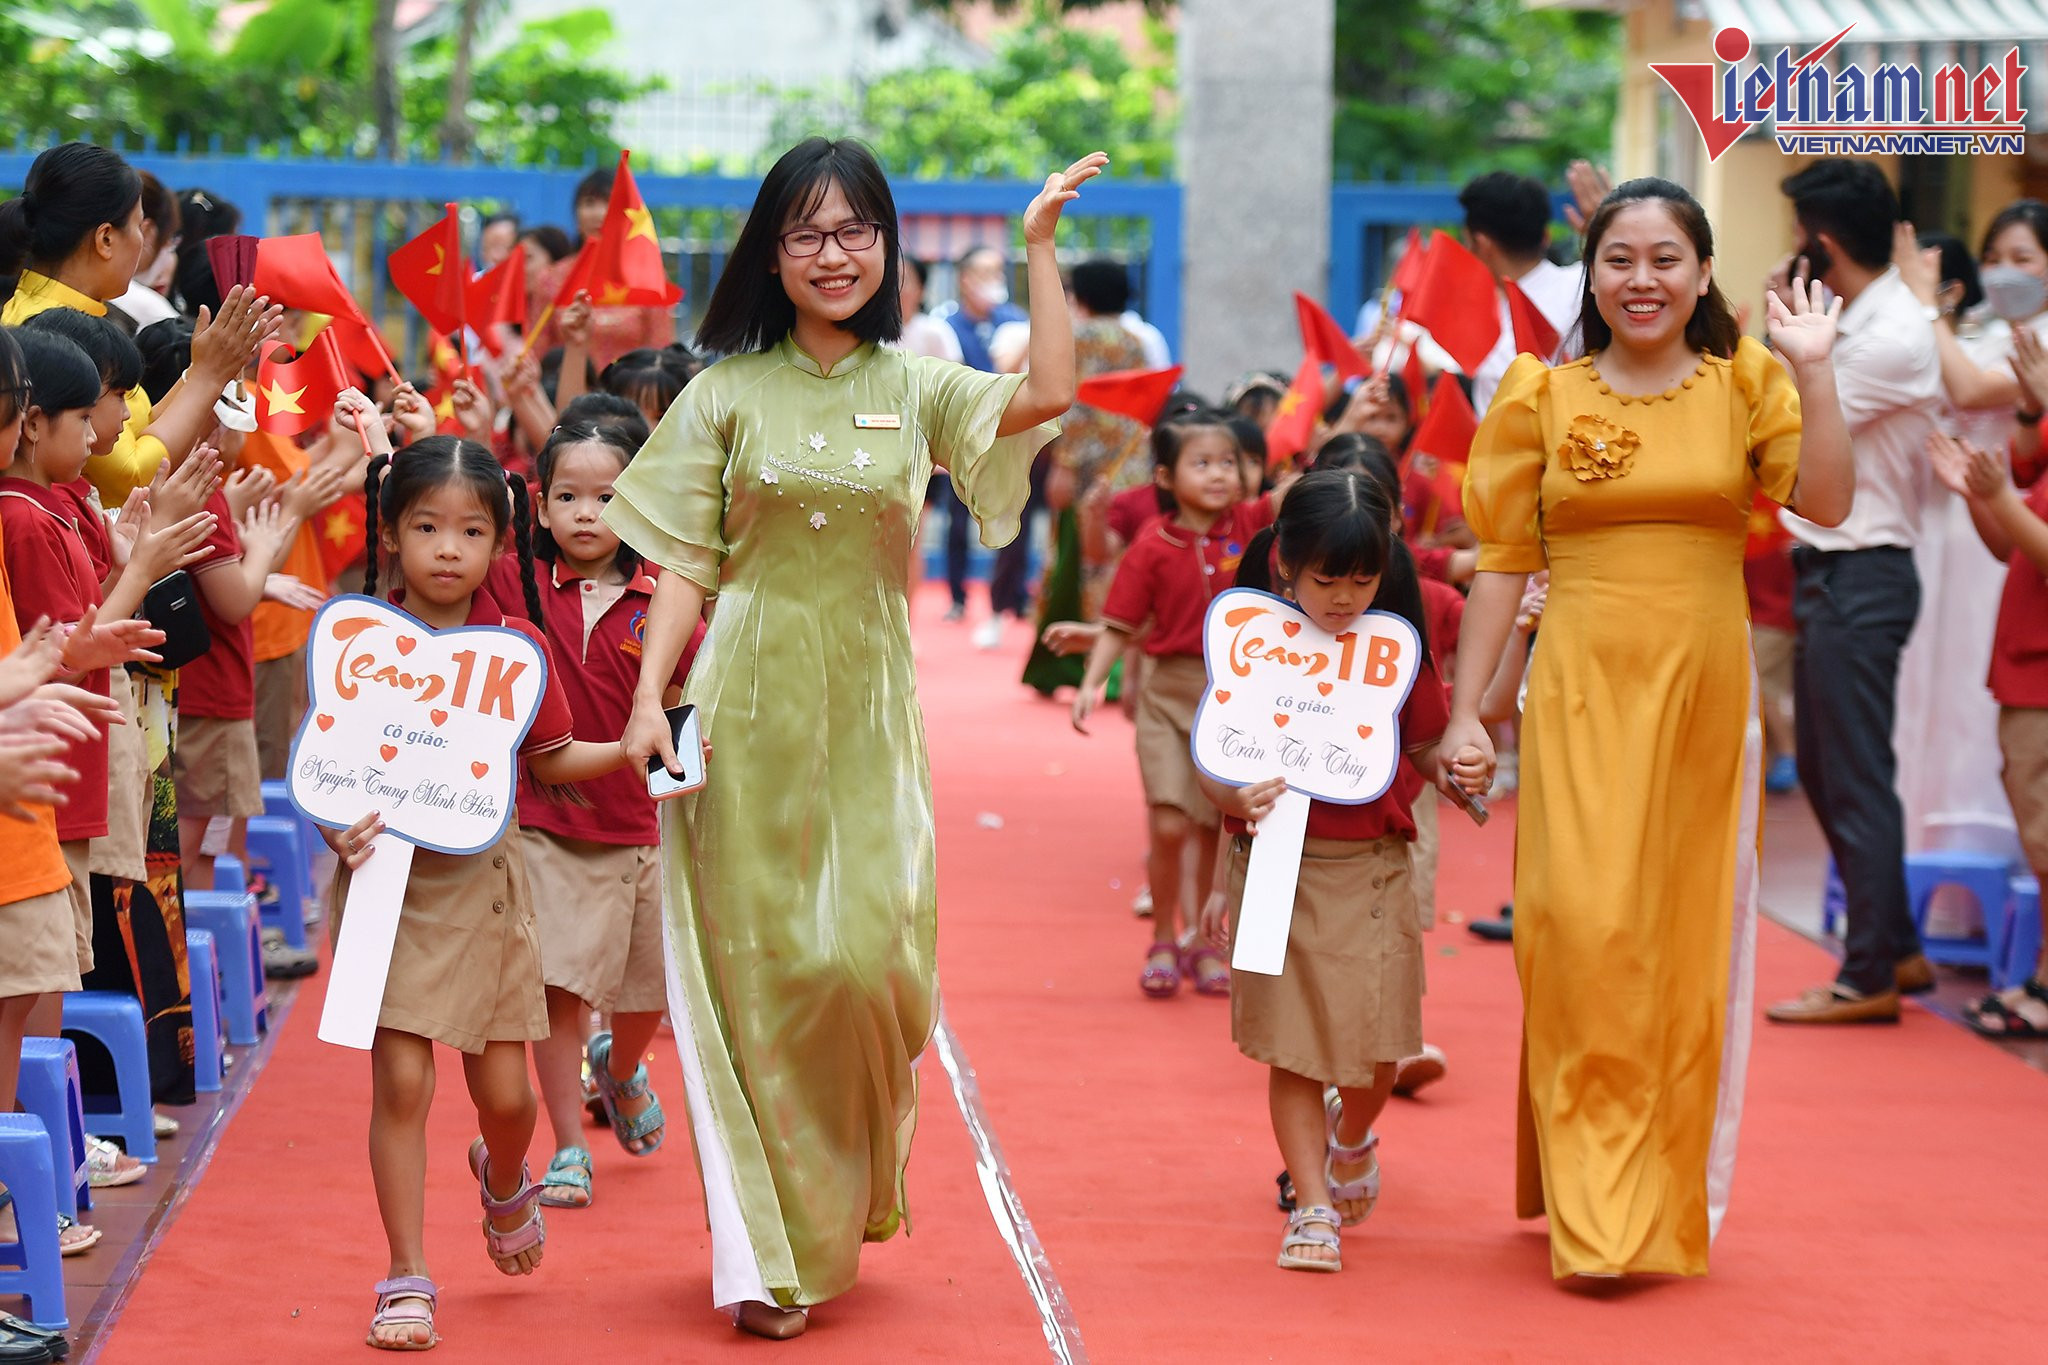 More than 23 million Vietnamese students begin new school year